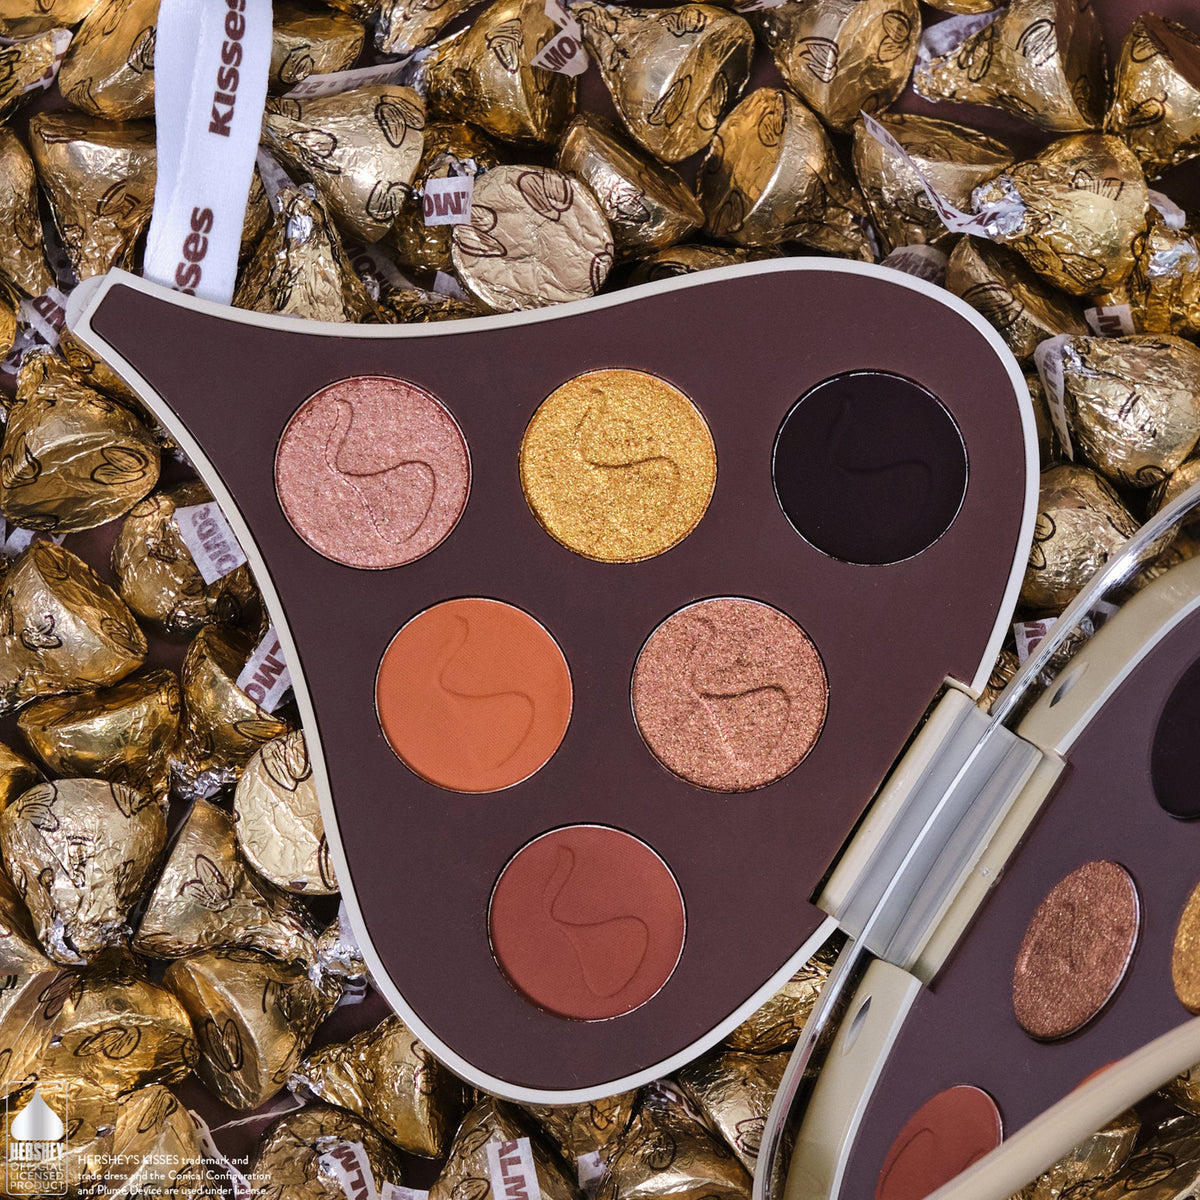 Glamlite Cosmetics | Hershey's Kisses x Glamlite Milk Chocolate with Almonds Palette